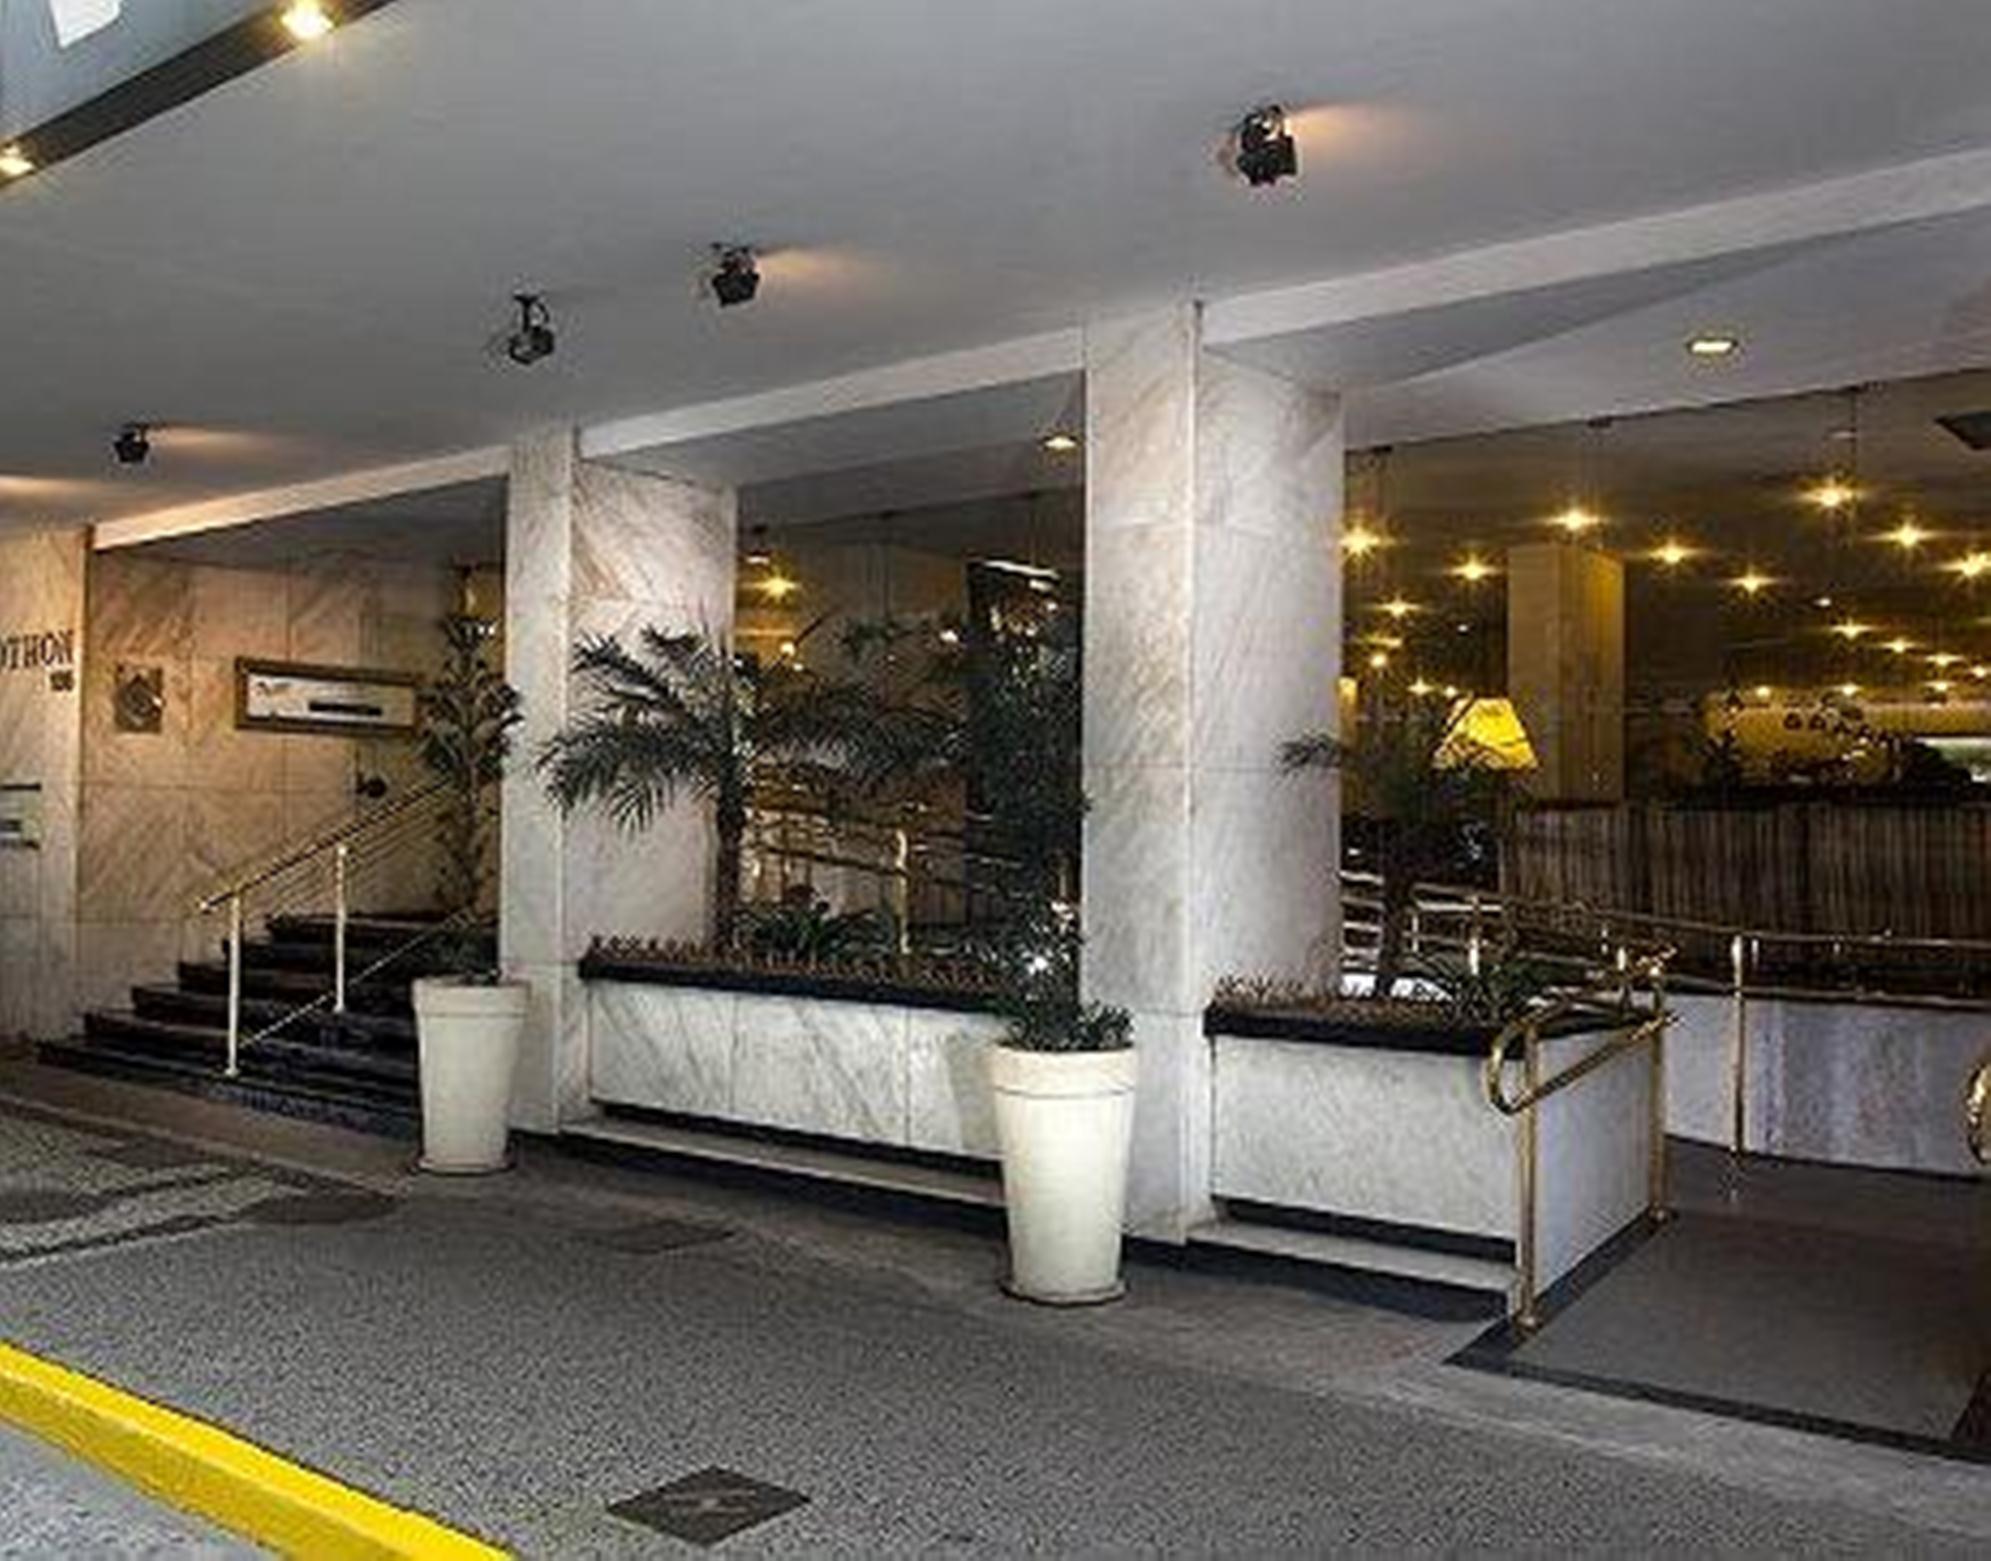 Savoy Othon Hotel Rio de Janeiro Exterior photo